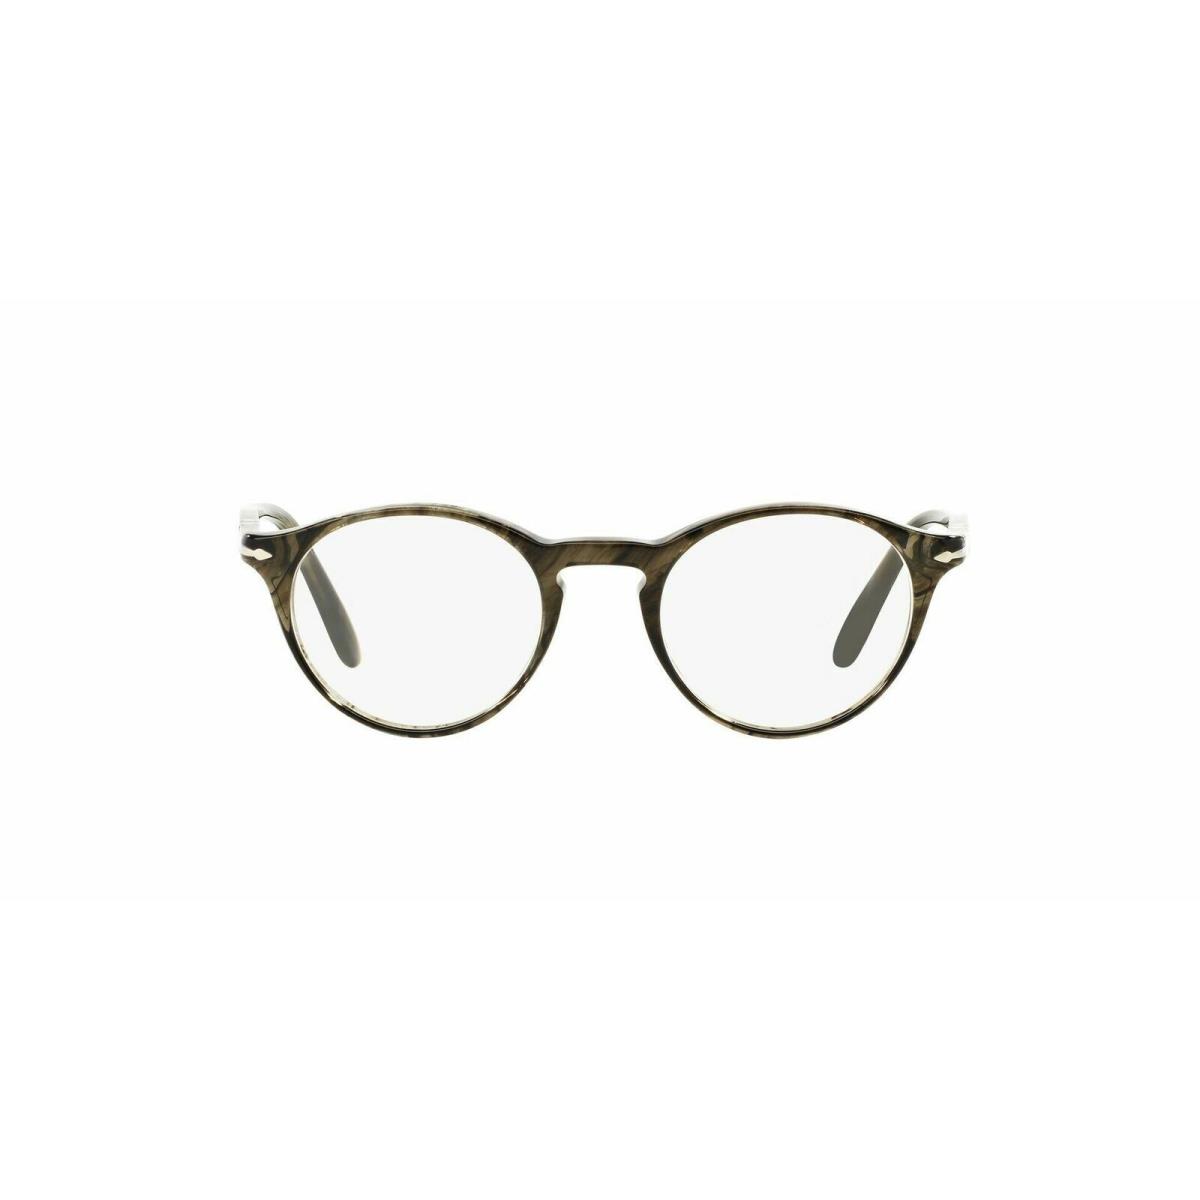 Persol Eyeglasses P3092-V 1020 Gray Frames 48MM ST Rx-able